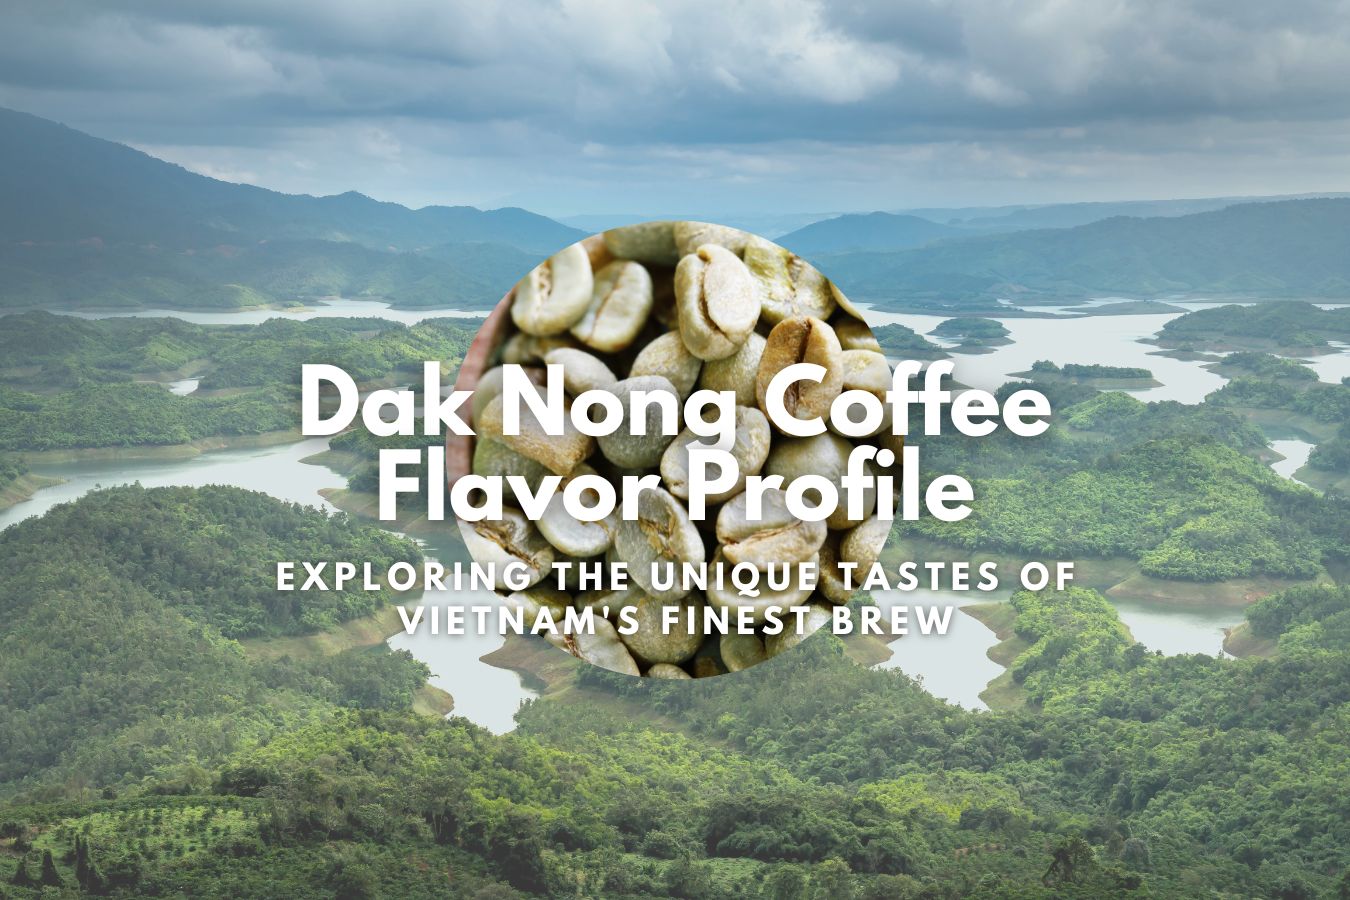 Dak Nong Coffee Flavor Profile Exploring the Unique Tastes of Vietnam's Finest Brew